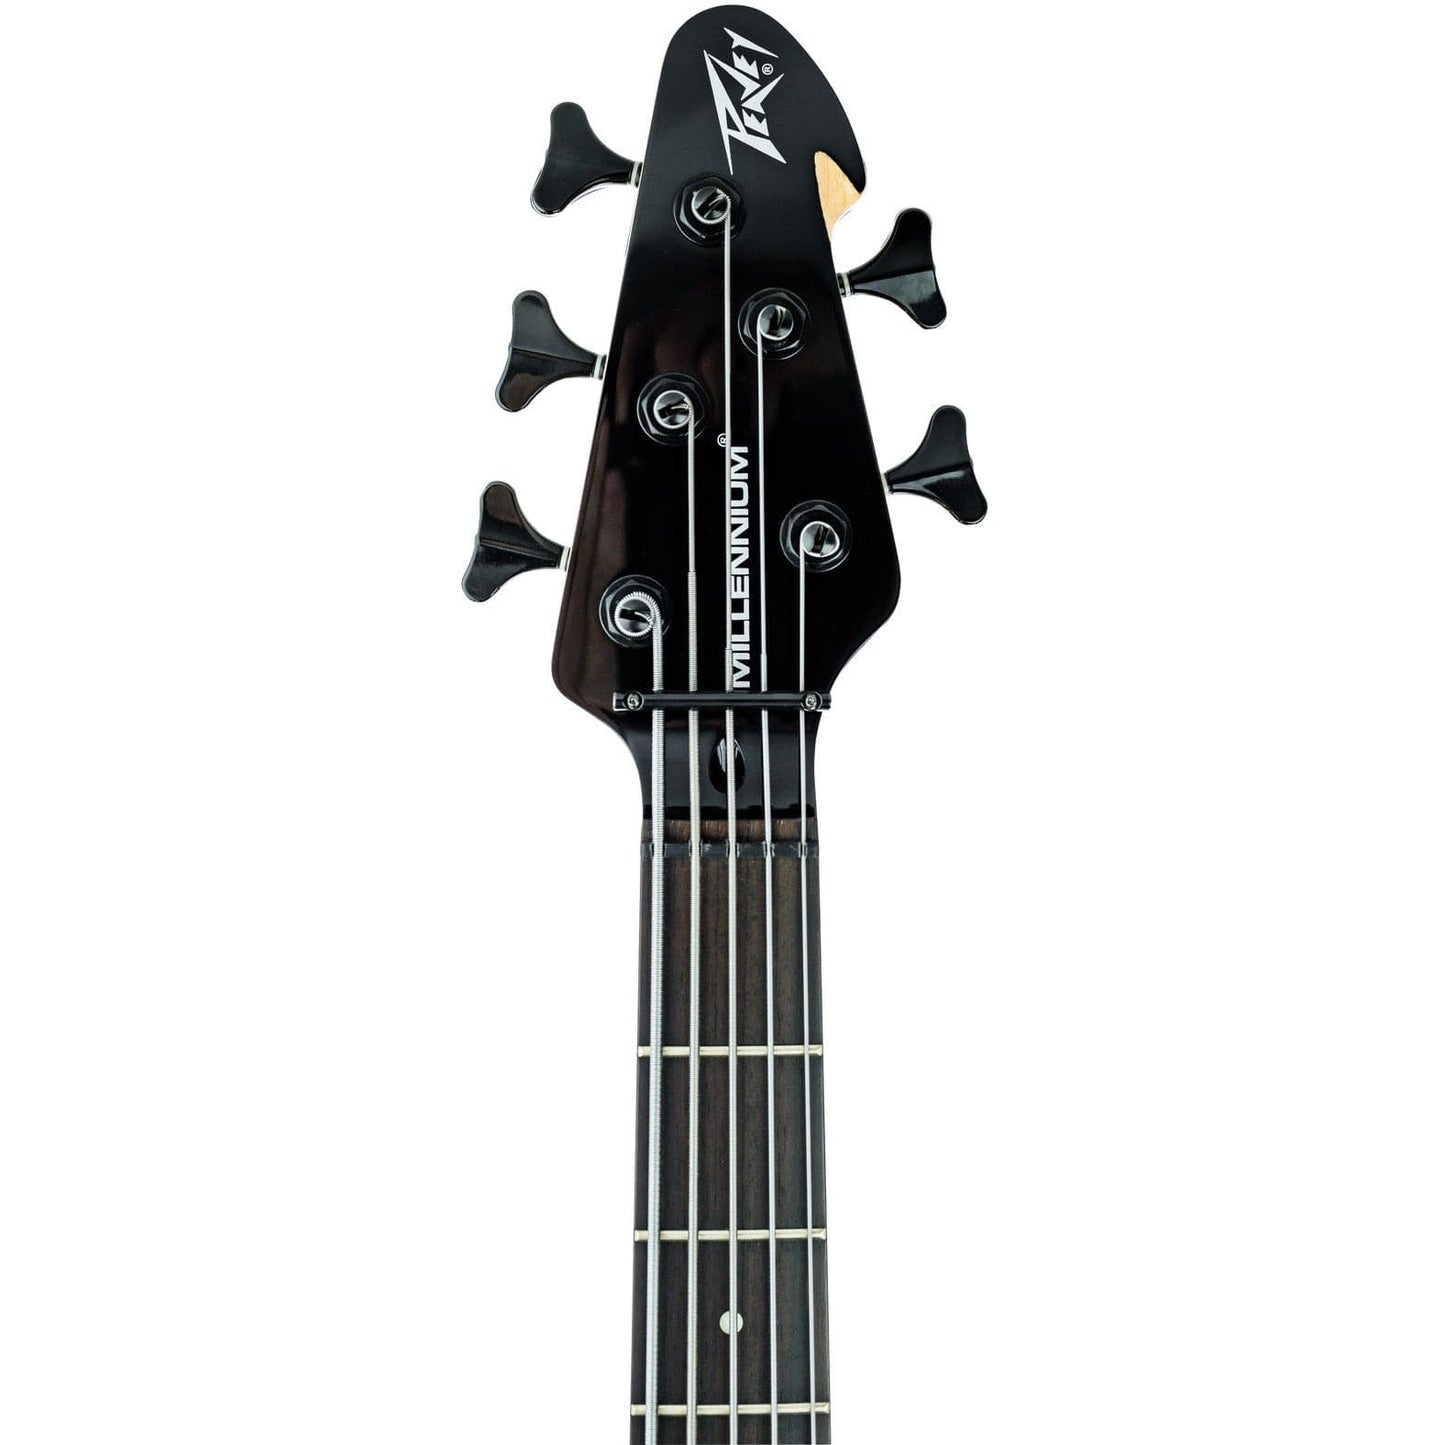 Peavey Millennium Series 5-String Bass Guitar in Trans Black